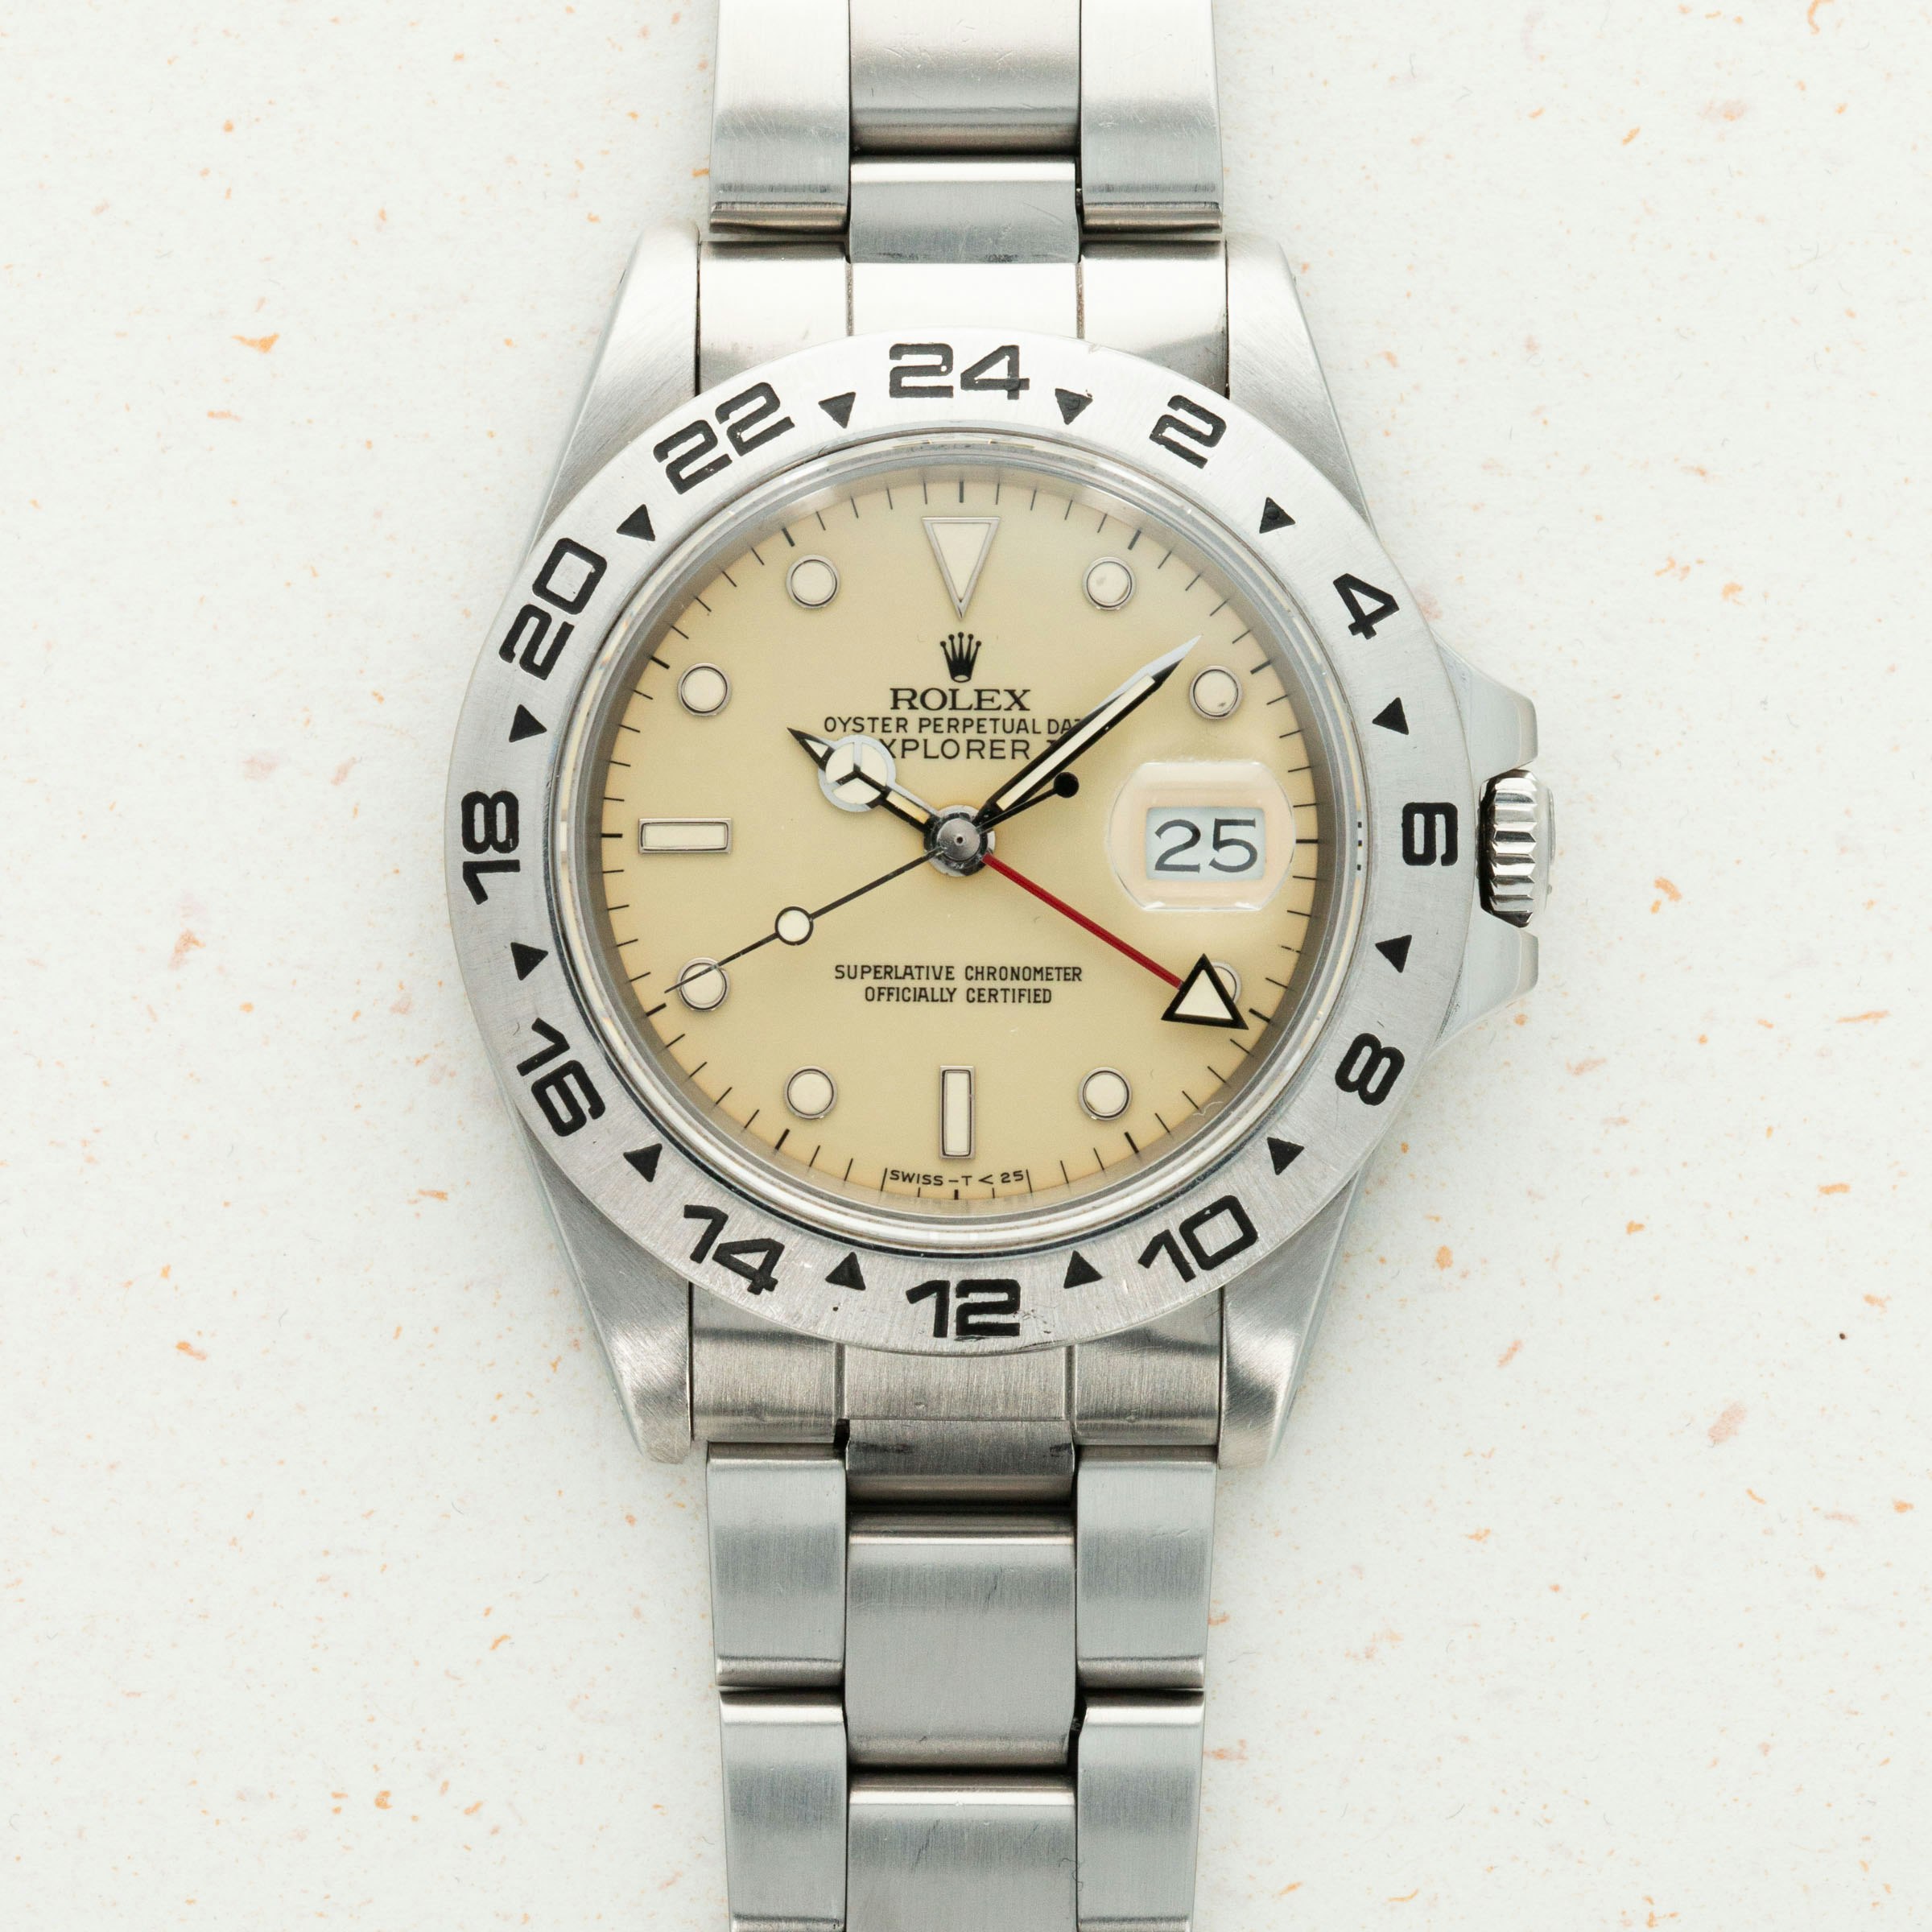 Thumbnail for Rolex Explorer II Cream Dial 16550